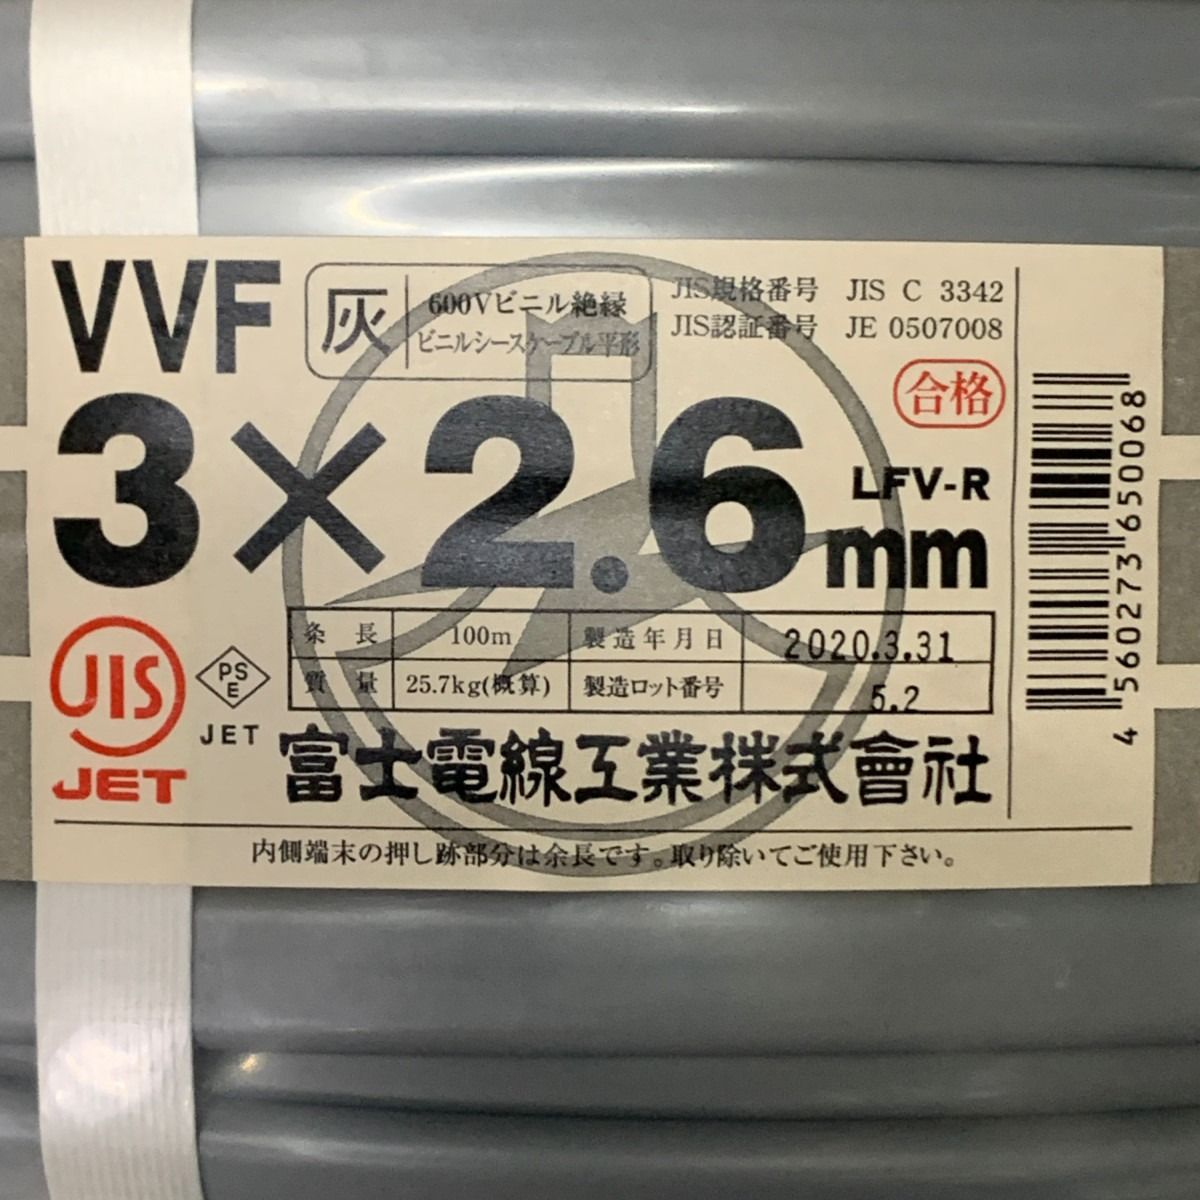 VVF 平形ケーブル 2.6?*3心 - 2